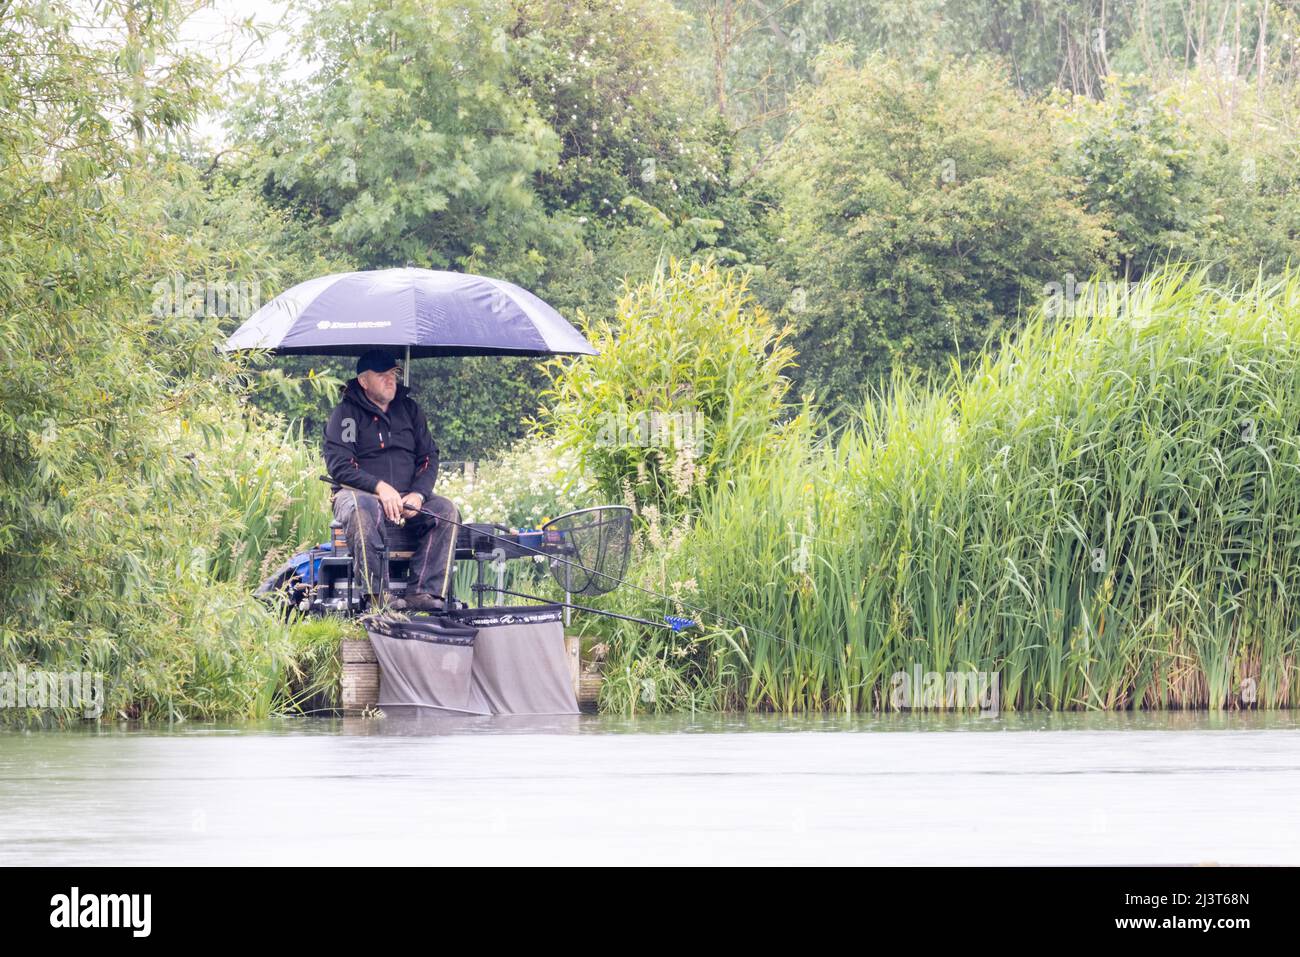 Man fishing in the rain under an umbrella Stock Photo